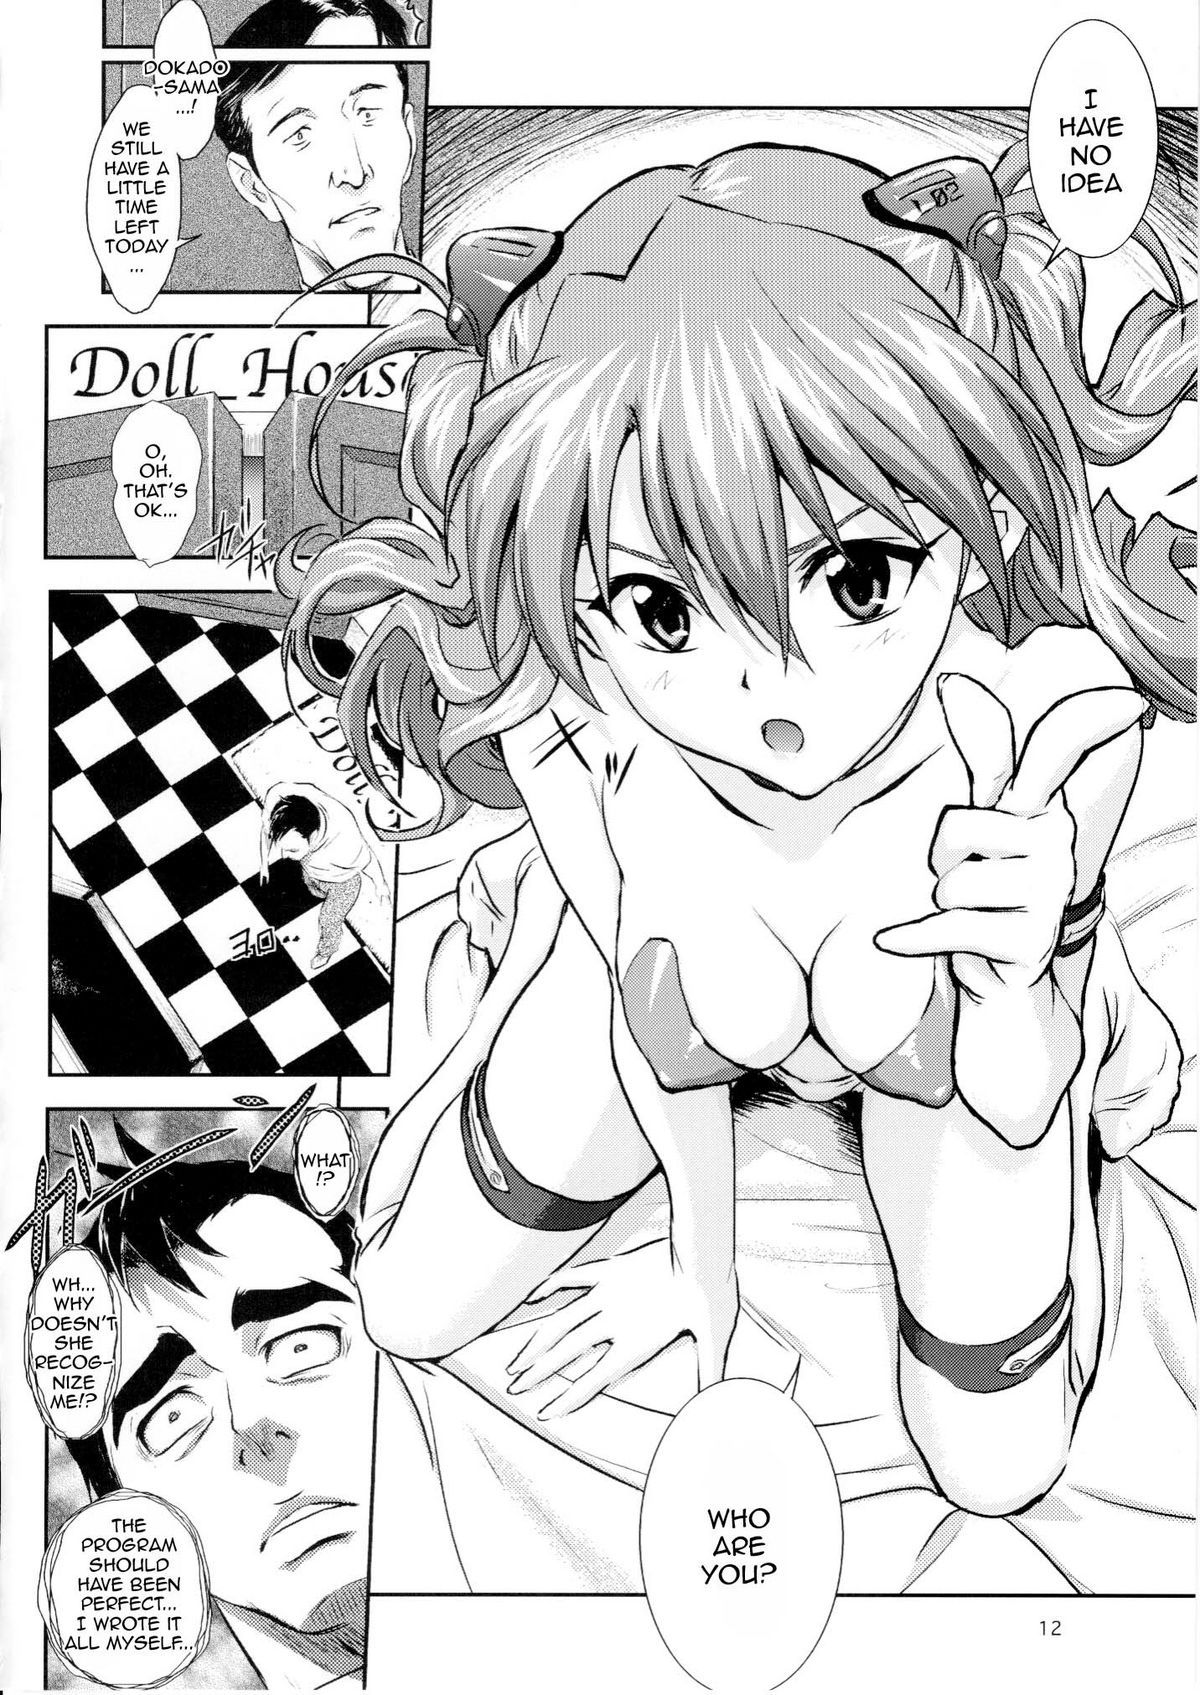 Doll House Vol. 1 neon genesis evangelion 10 hentai manga